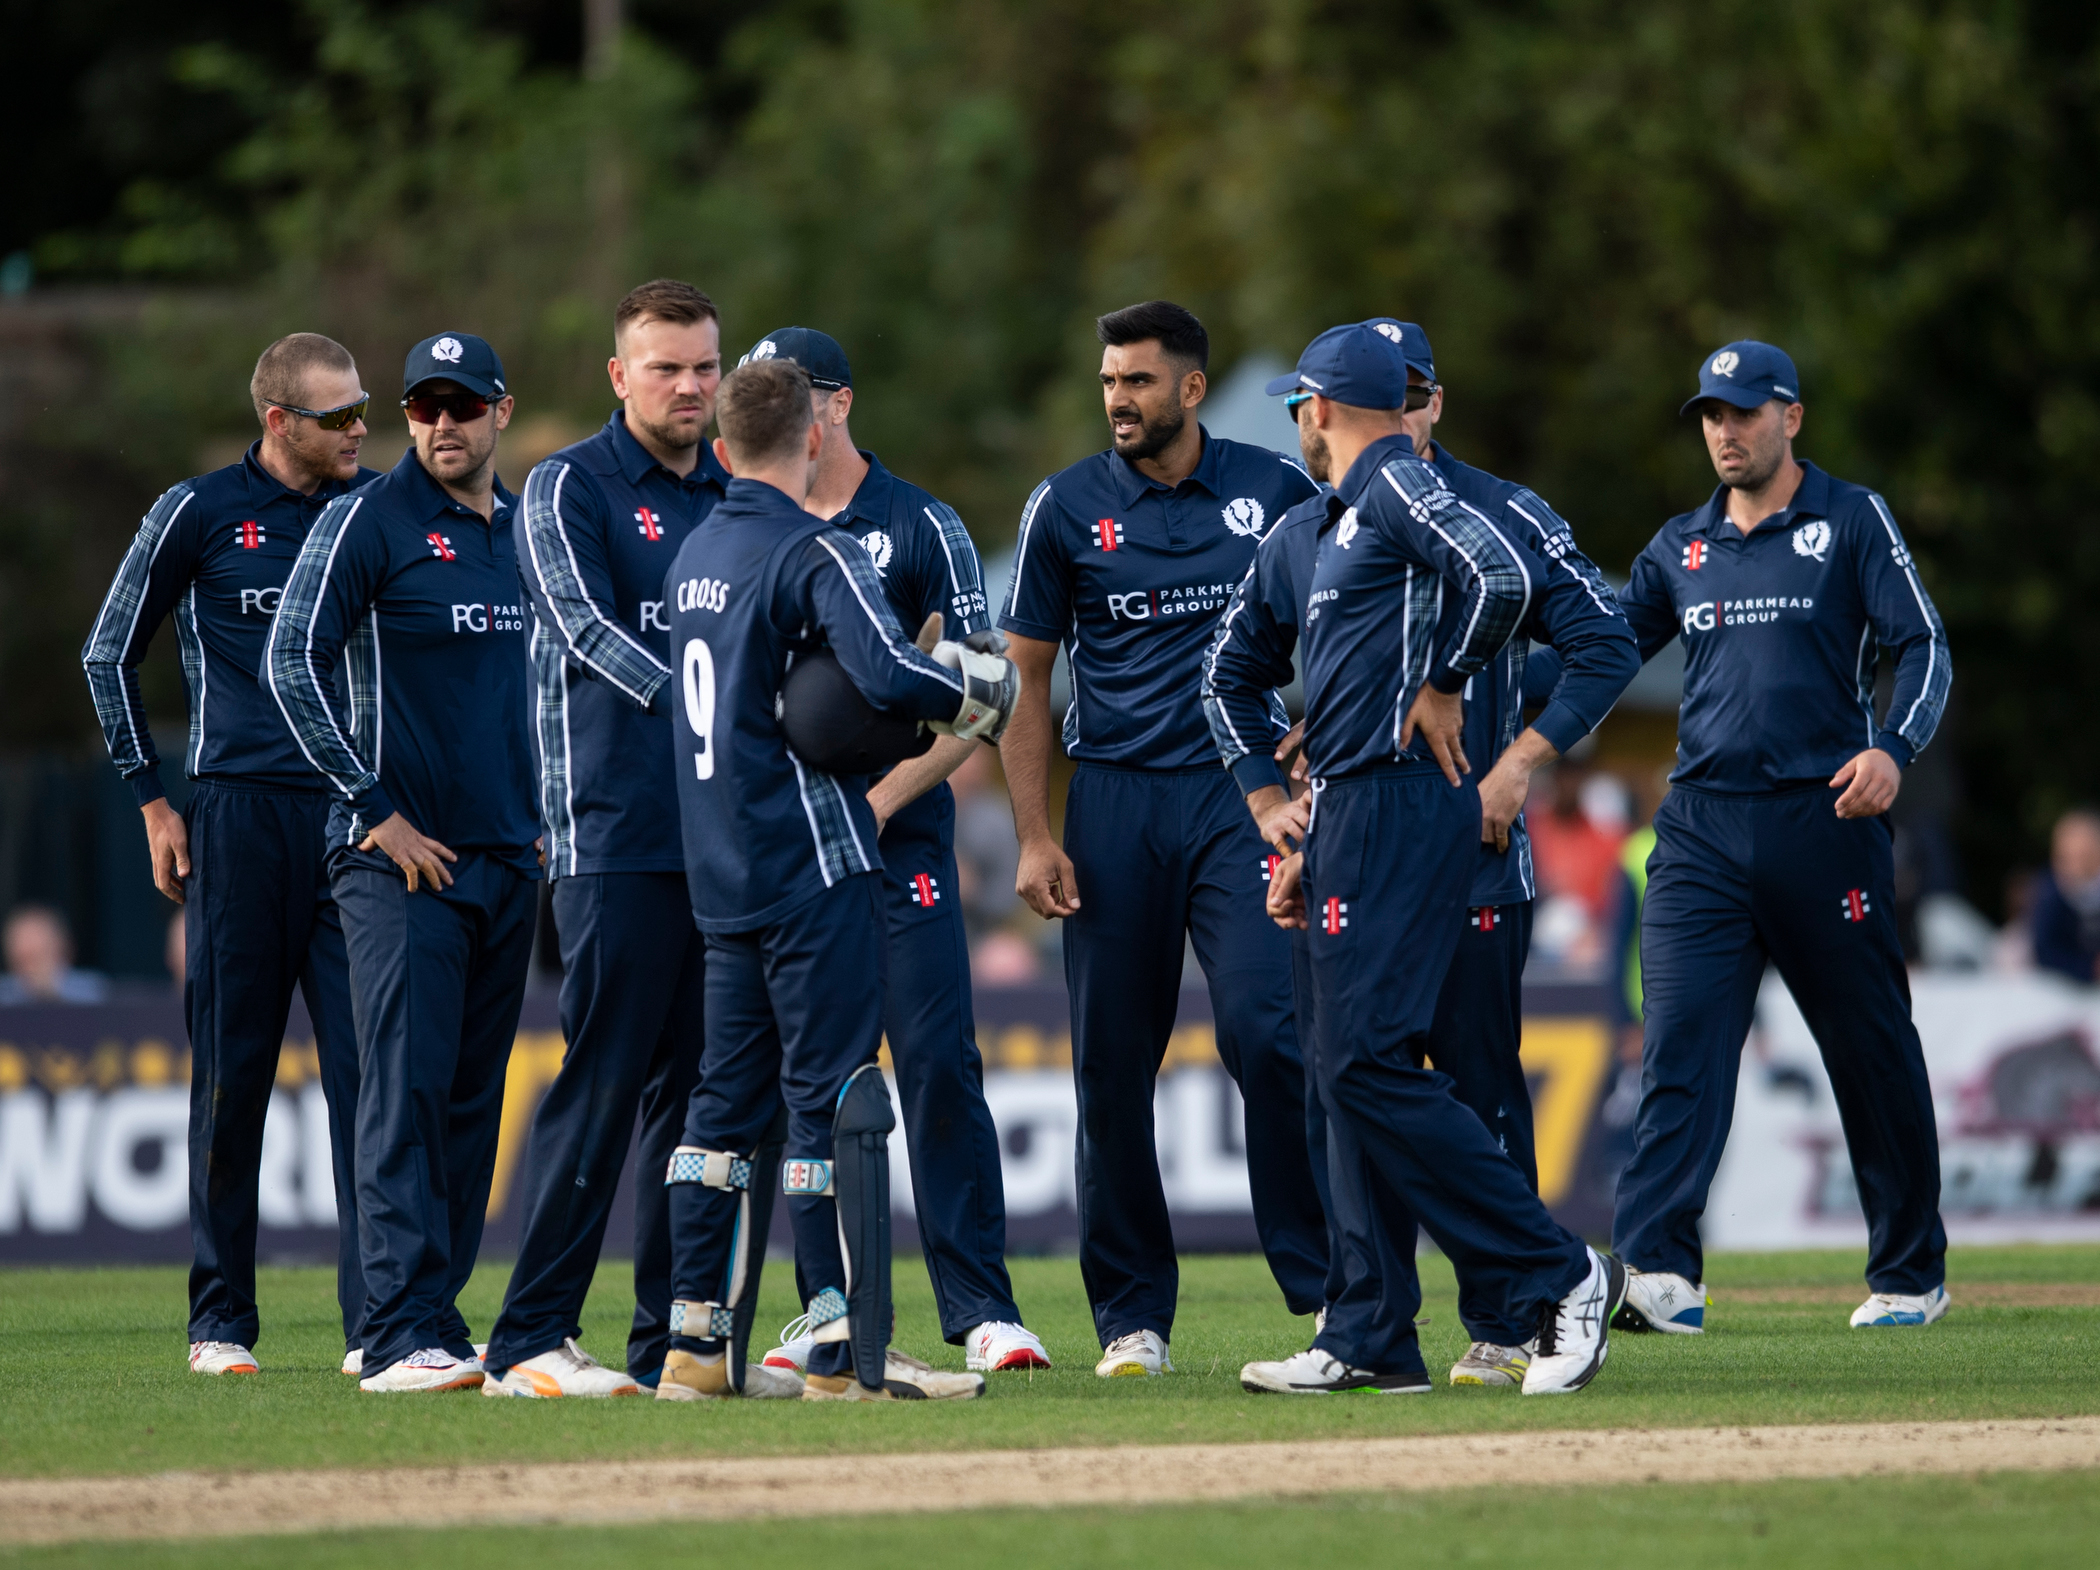 Scotland's Awaited Return to The Grange - Emerging Cricket